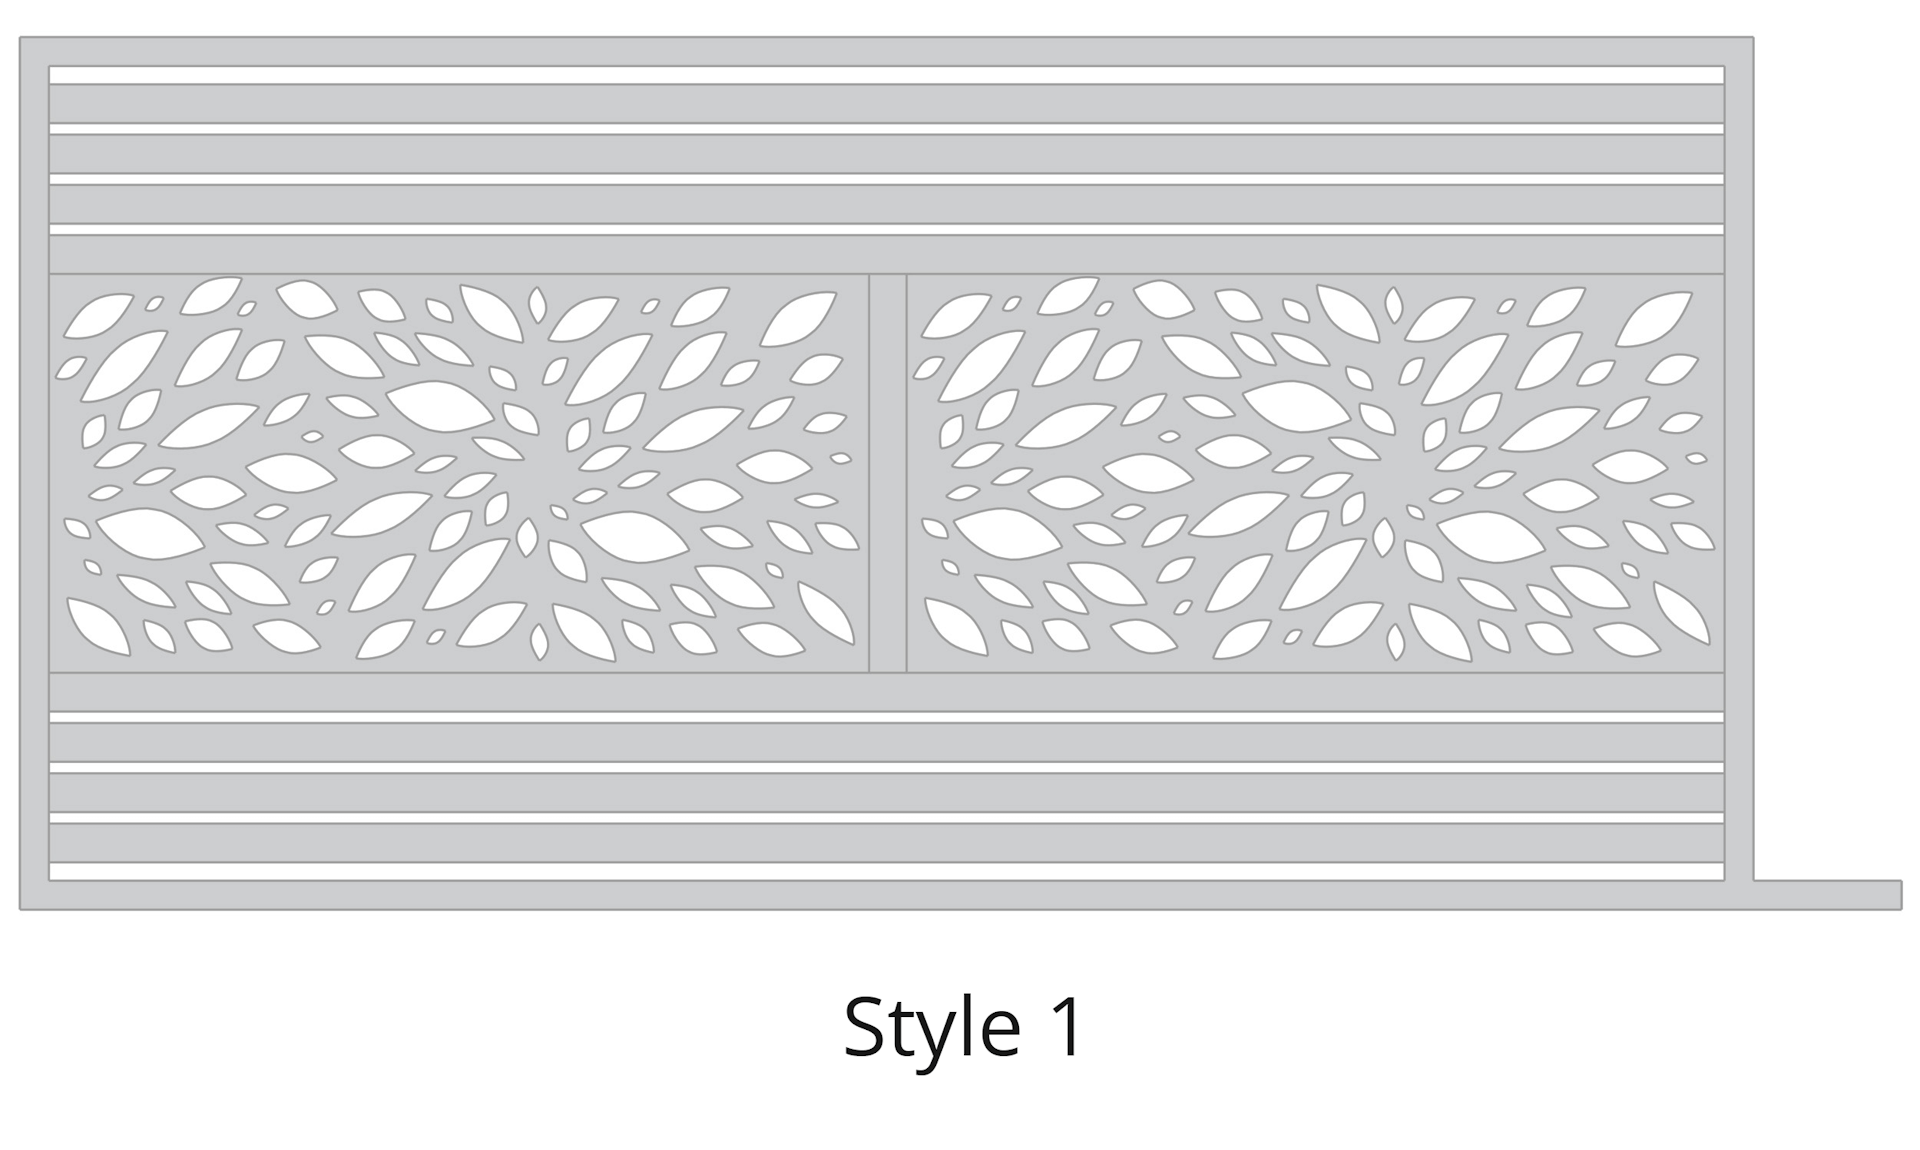 Lazer Cut Gate Design - Style #1